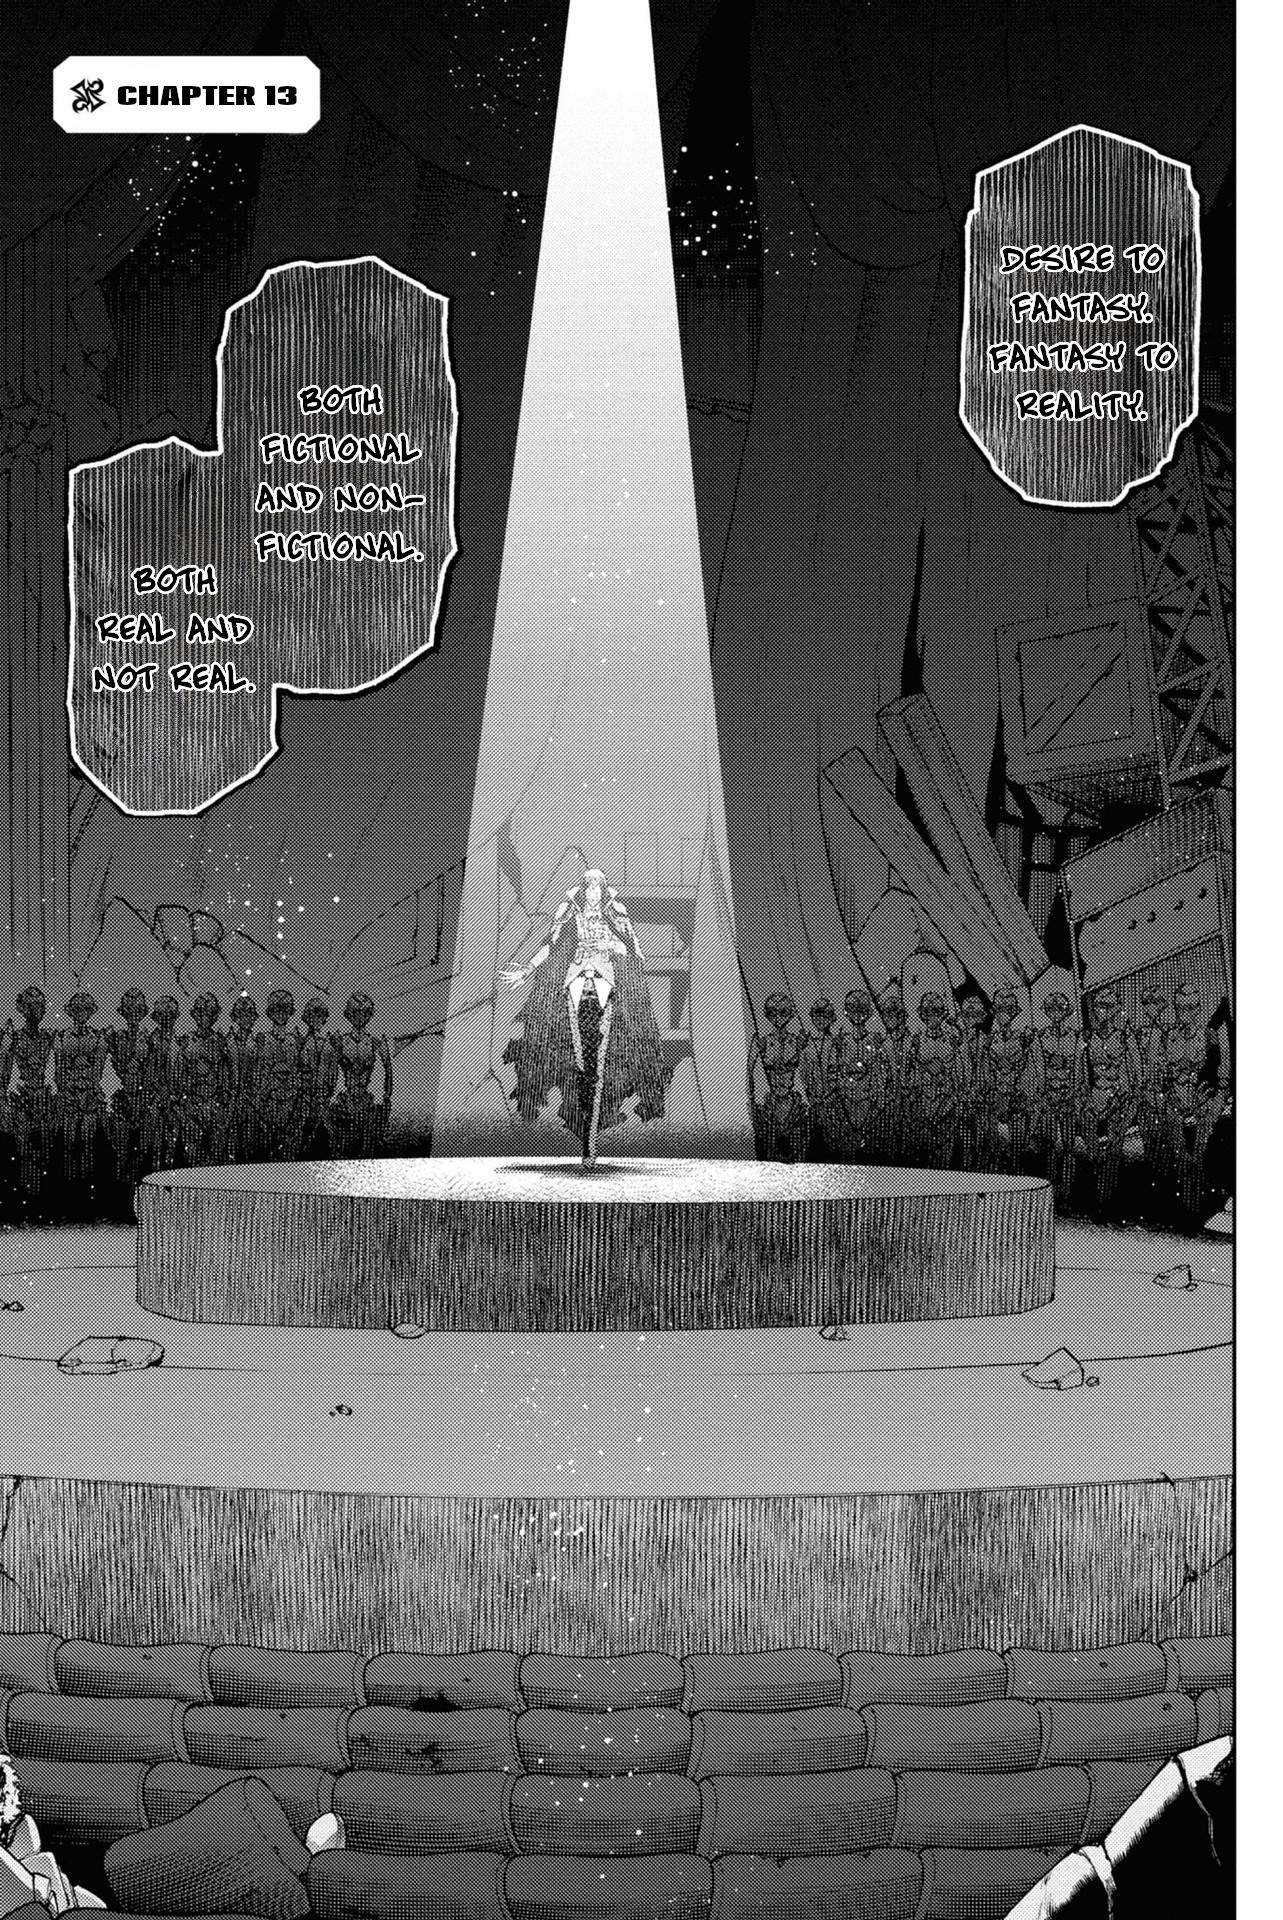 Fate/grand Order: Epic Of Remnant - Pseudo-Singularity I: Quarantined Territory Of Malice, Shinjuku - Shinjuku Phantom Incident Vol.3 Chapter 13